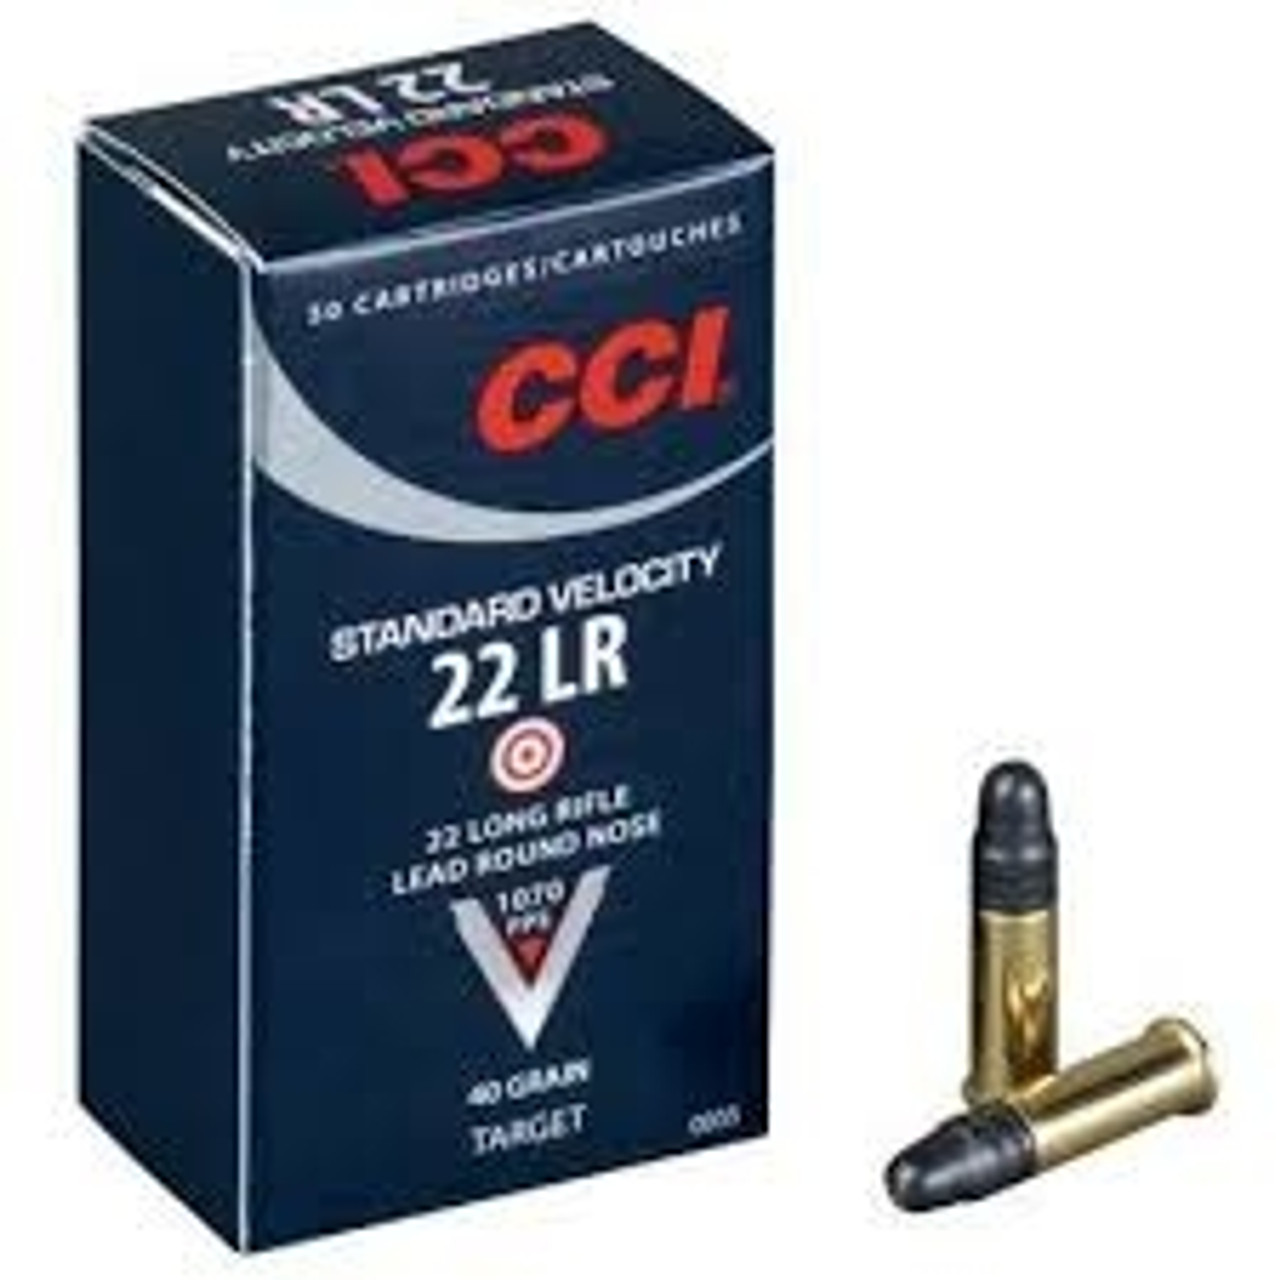 Cci 22lr Ammunition 0035 40 Grain 1070fps Standard Velocity Case Of